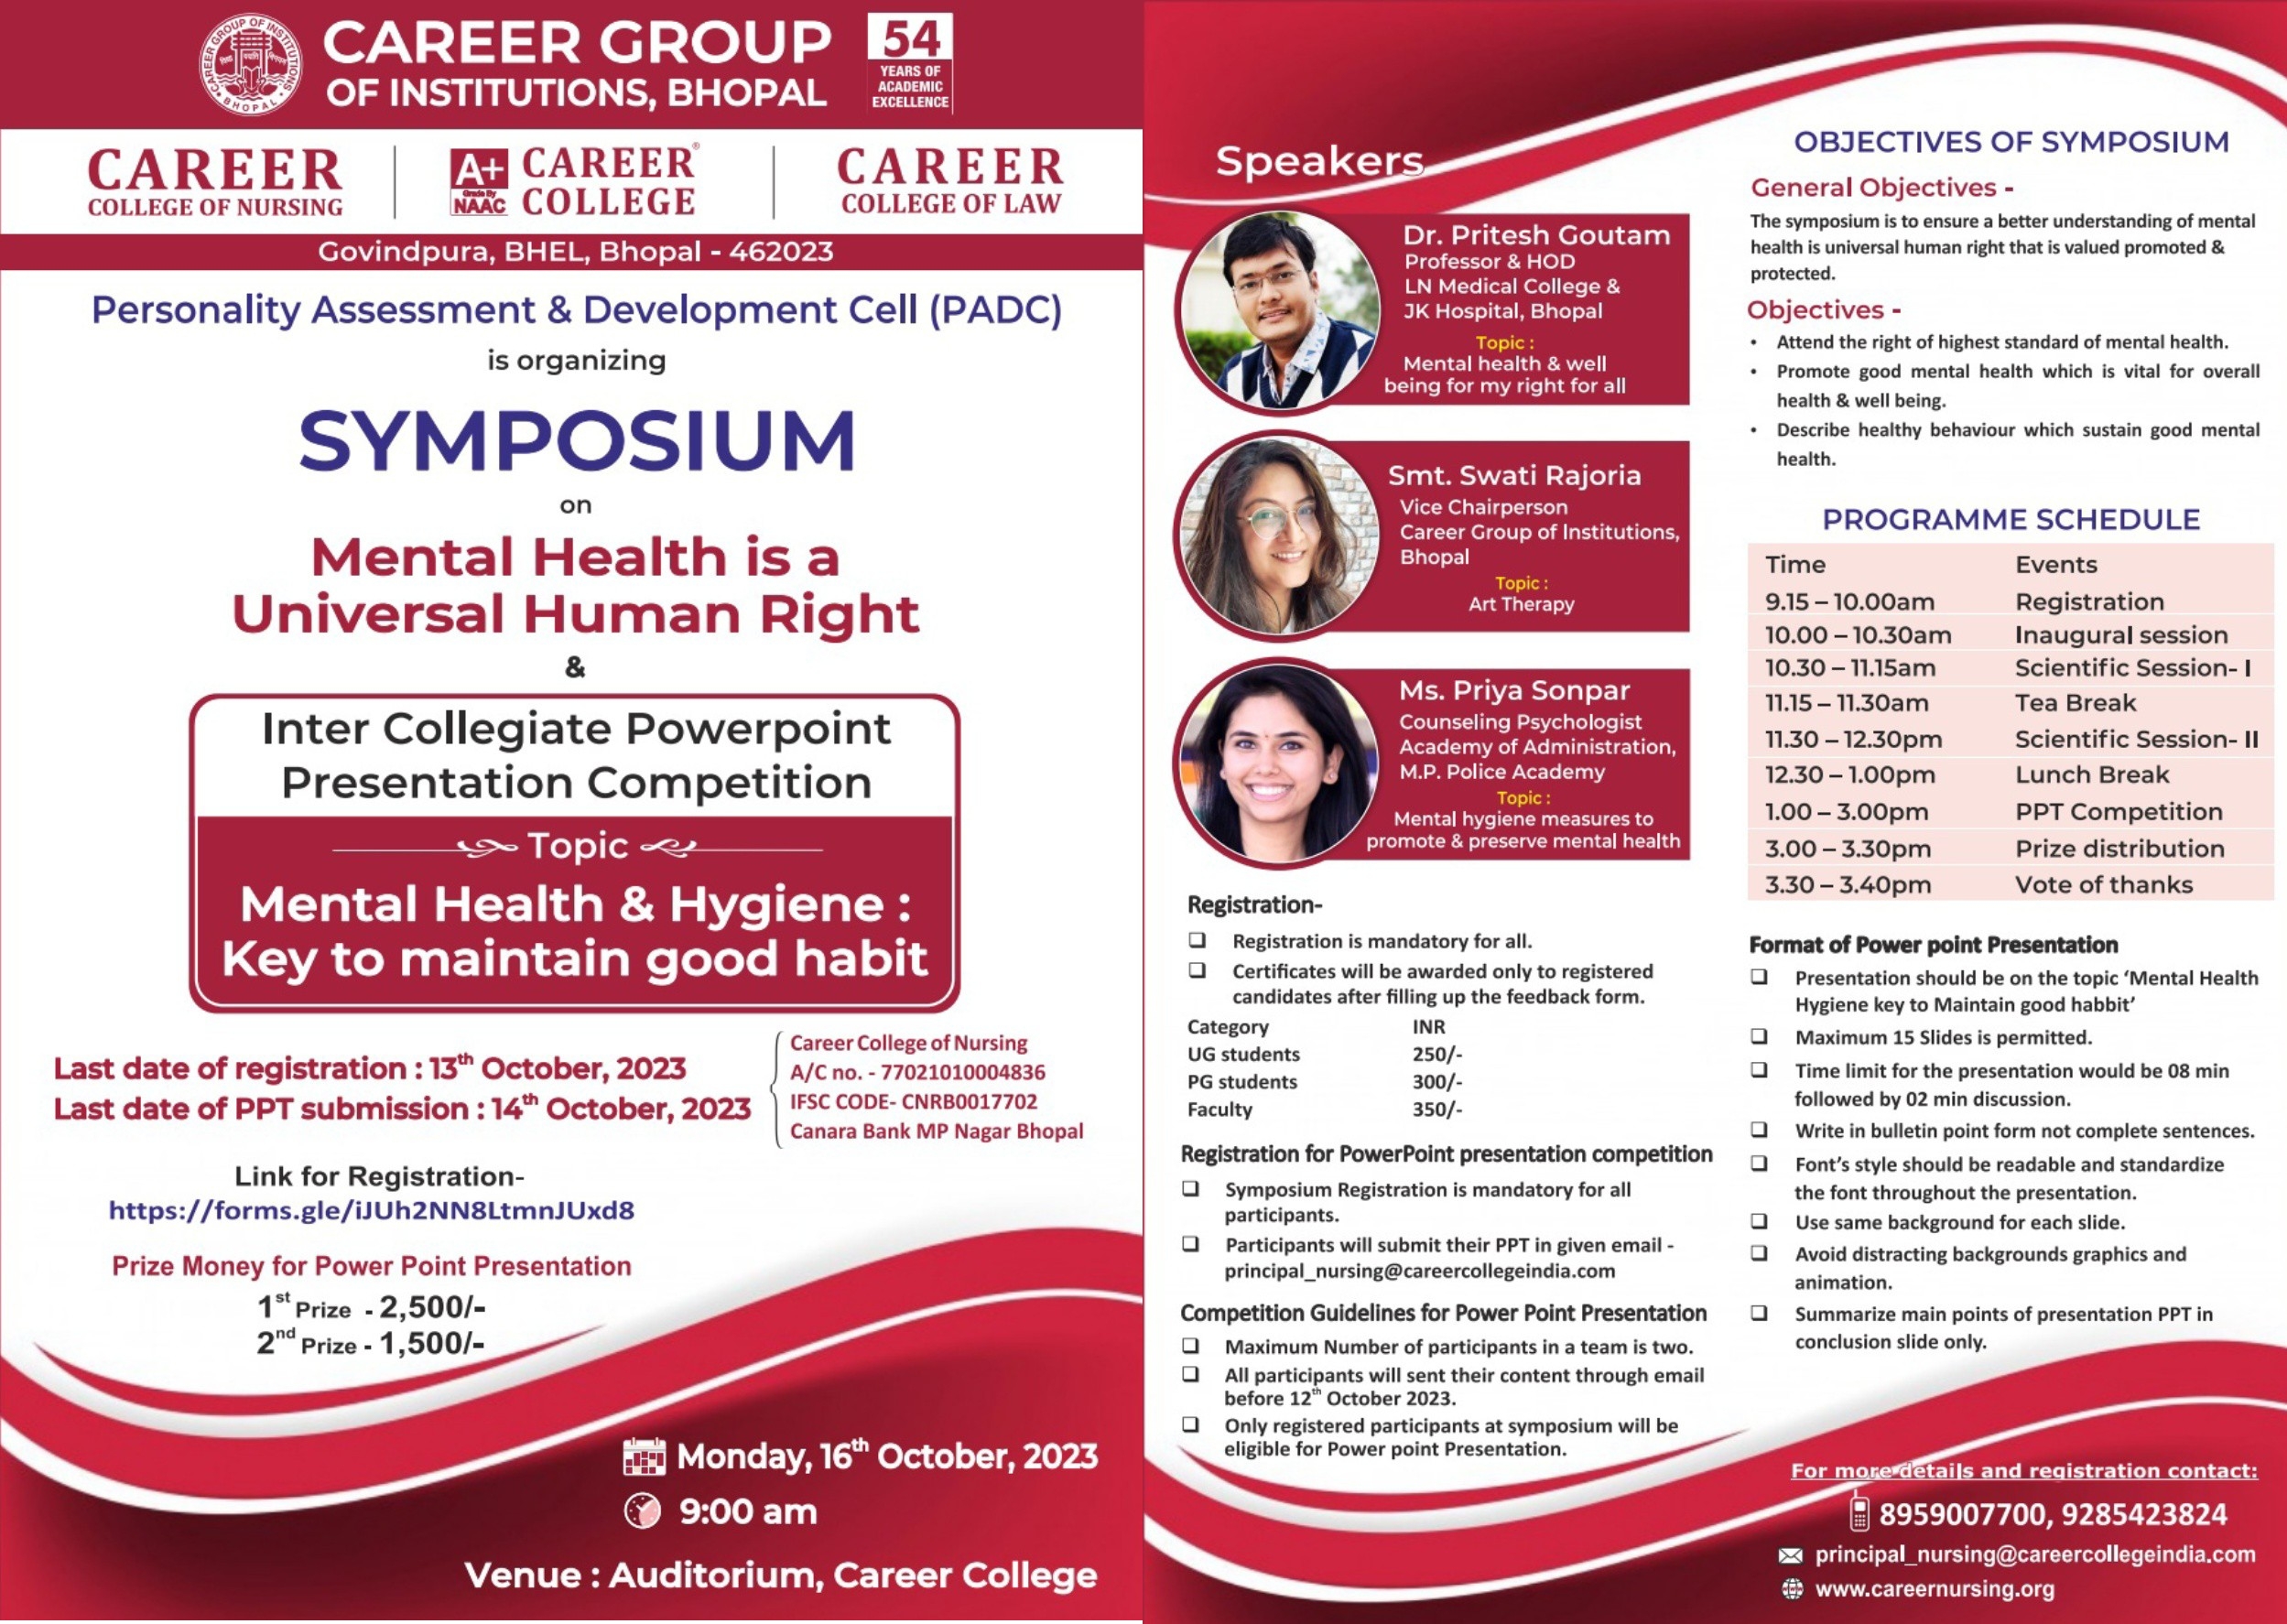 Symposium on Mental Health